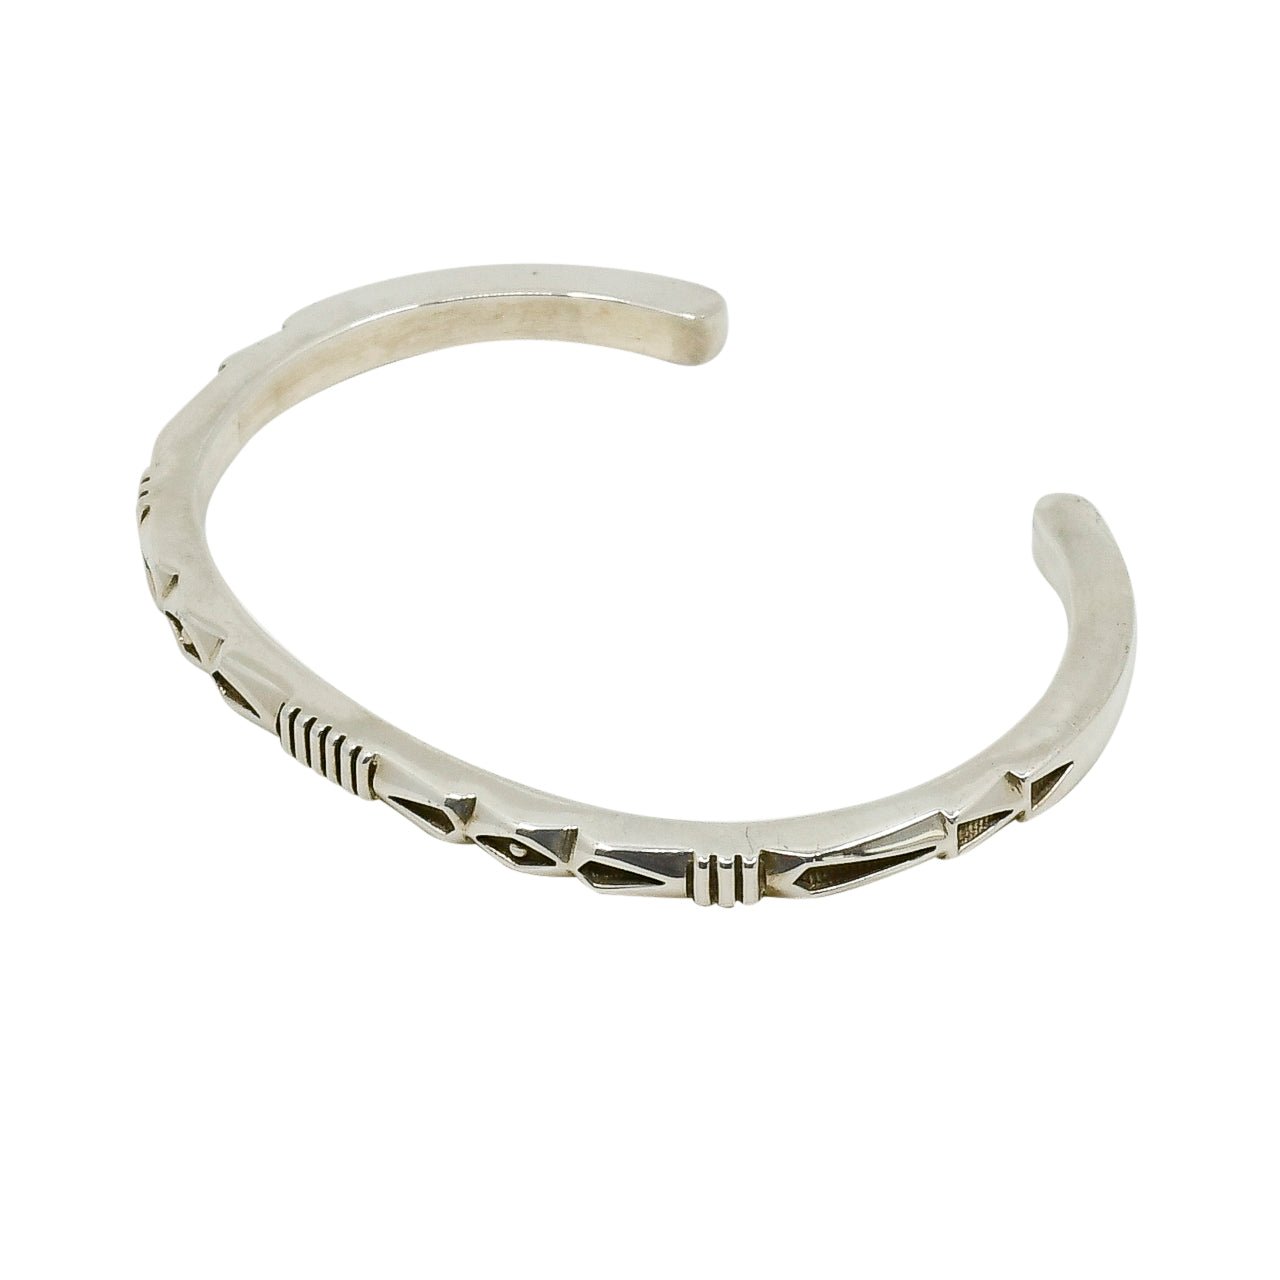 Jennifer Curtis Narrow Silver Bangle Bracelet With Geometric Shapes - Turquoise & Tufa